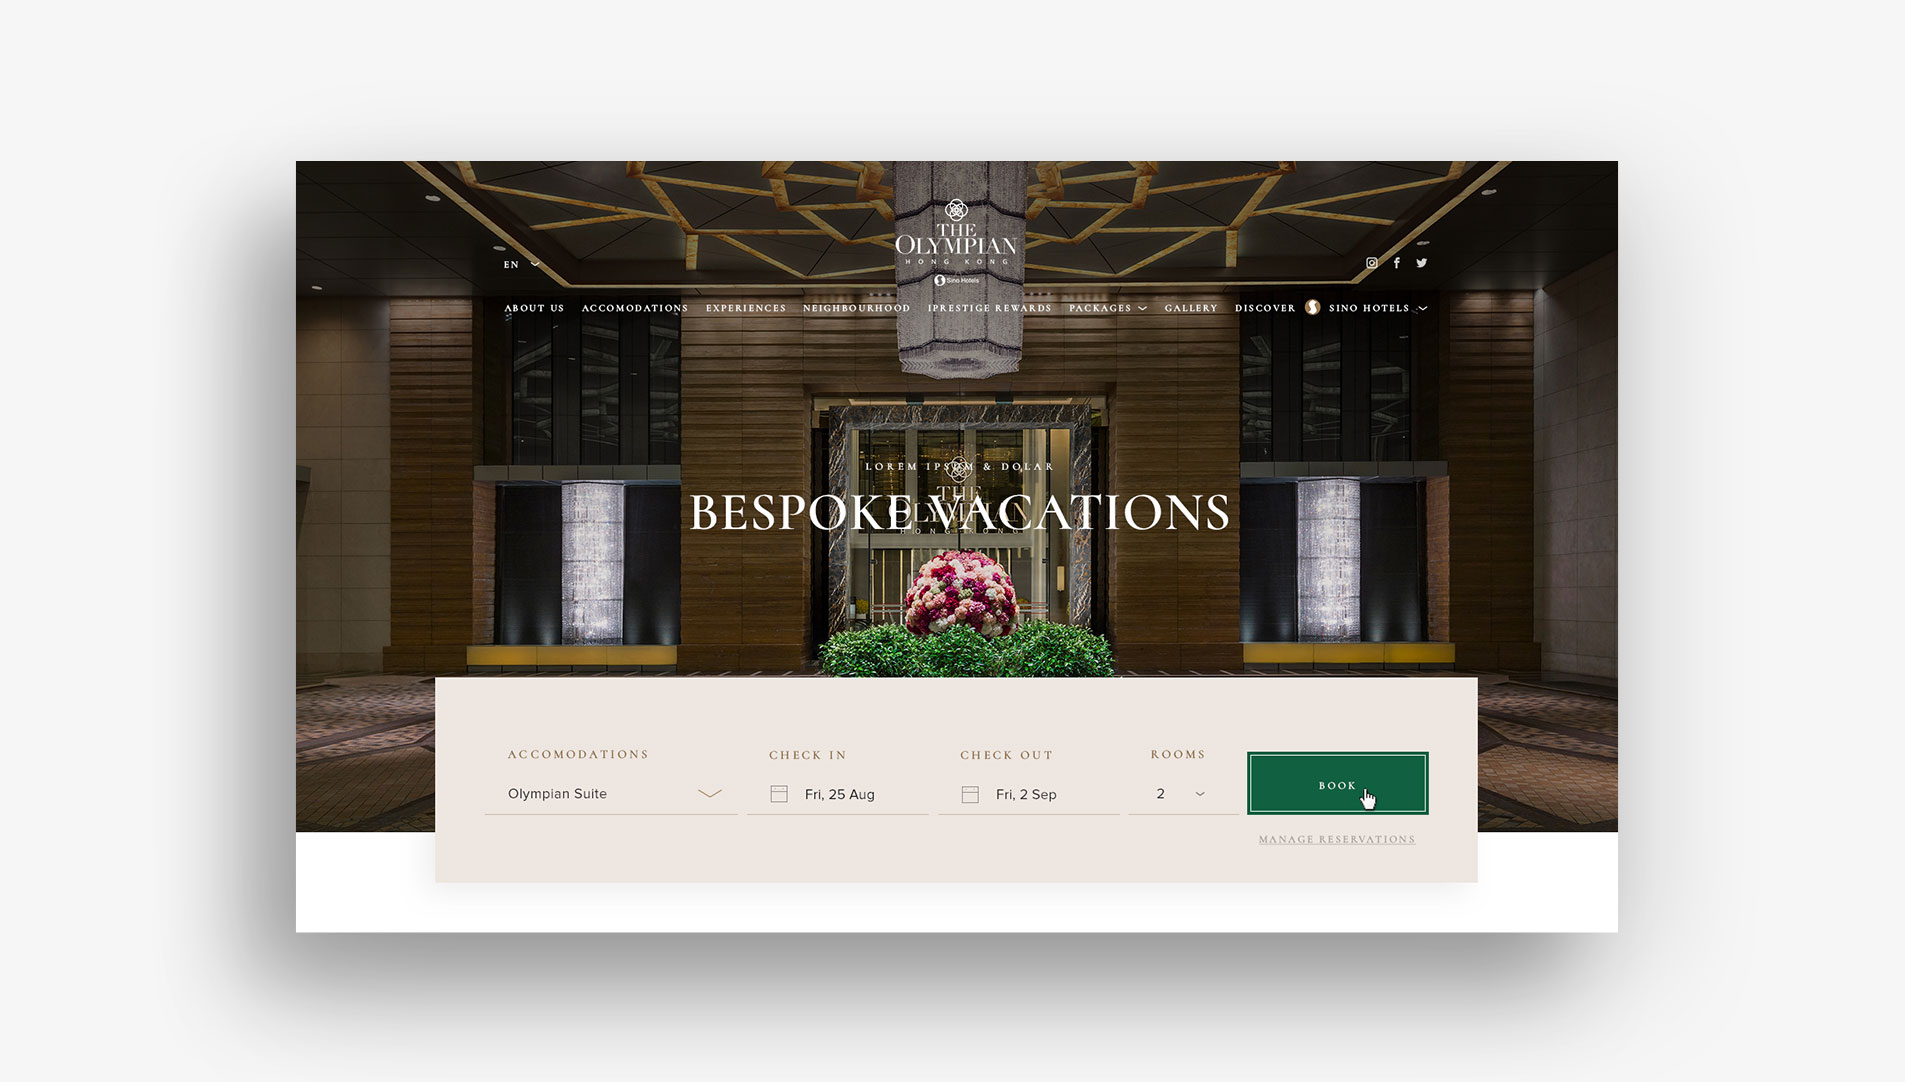 web design singapore sino group hotels slideshow 02 - Sino Group Hotels